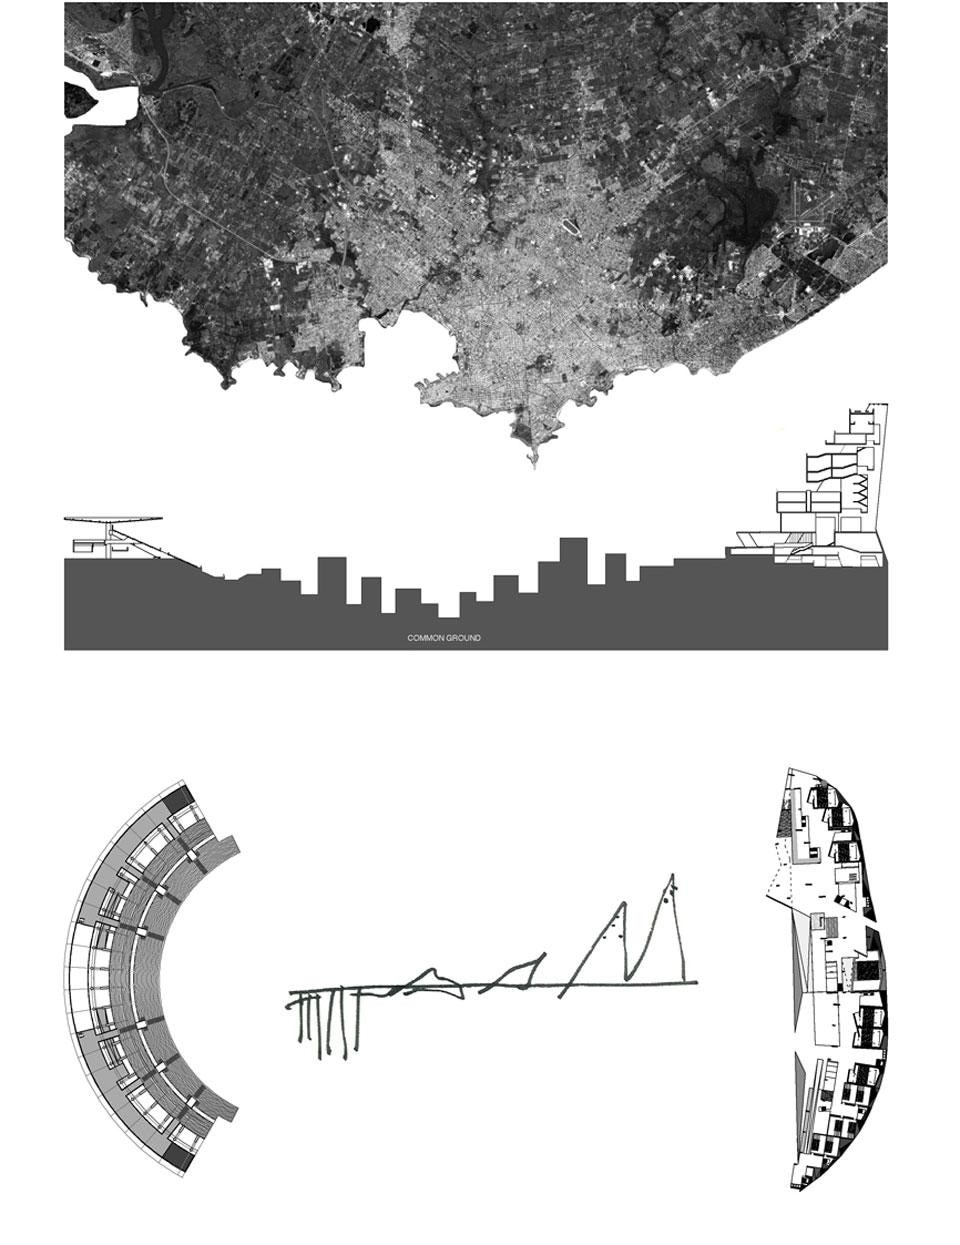 Grafton Architects, Concept Sketch. Courtesy of Grafton Architects